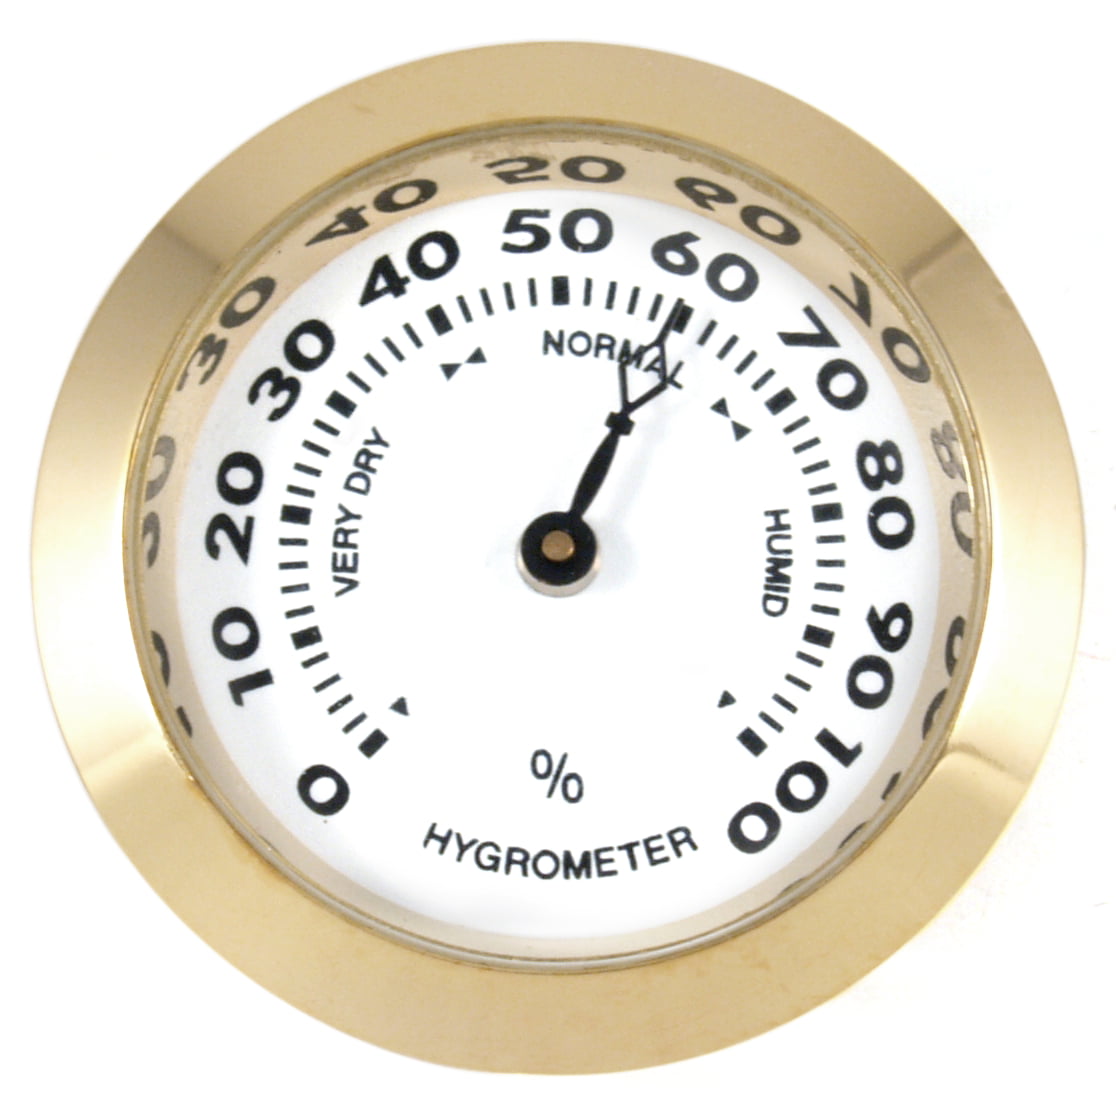 50mm Thermometer Cigar Hygrometer Monitor Meter Gauge Humidity Measuring Tool DA 